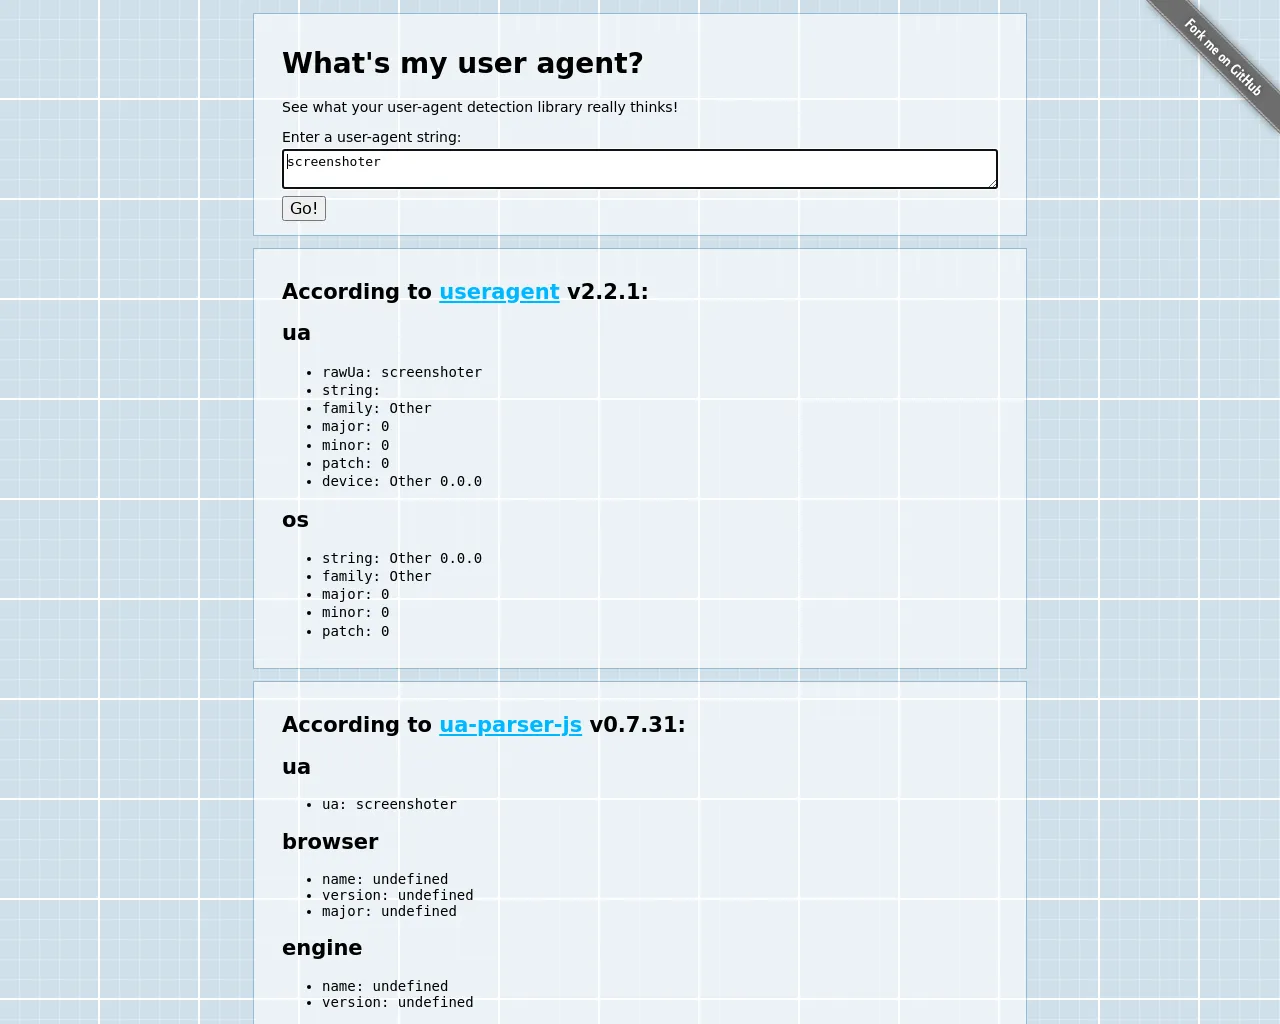 A screenshot with custom user agent by screenshot
API